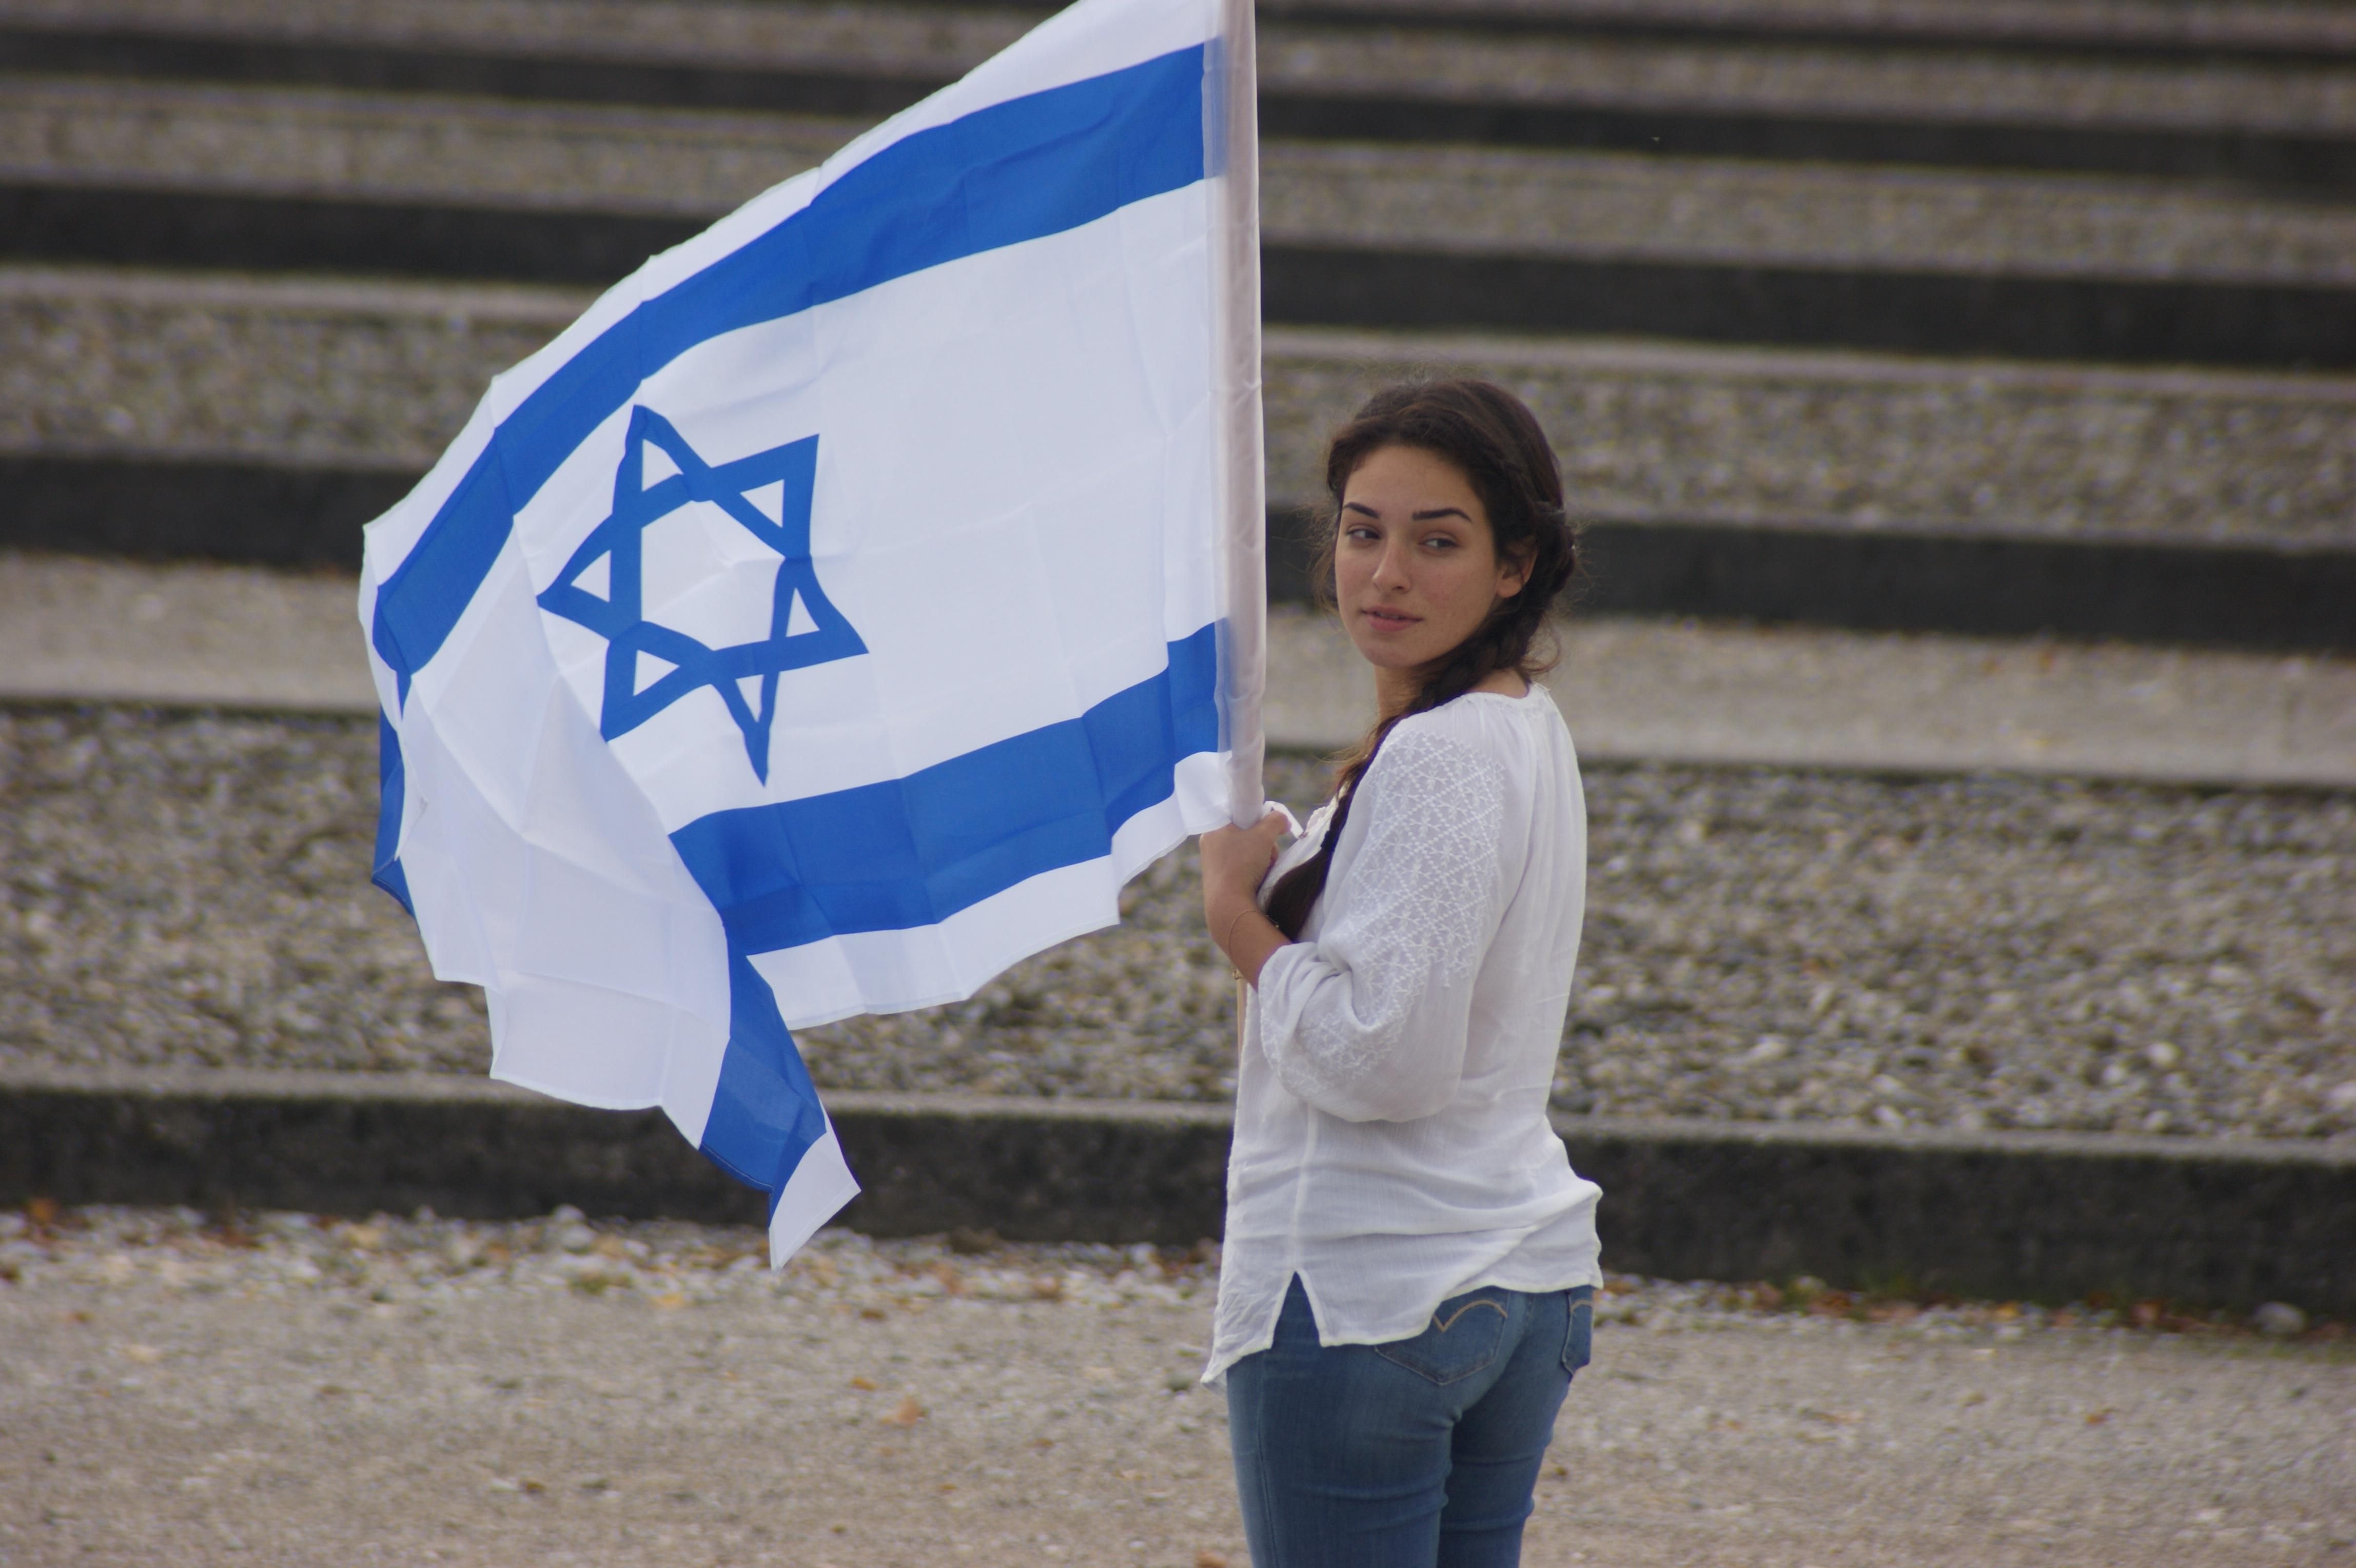 Israel's. Израэль Энгландер. Синагога и флаг Израиля. Девушка с флагом Израиля. Еврейка с флагом.